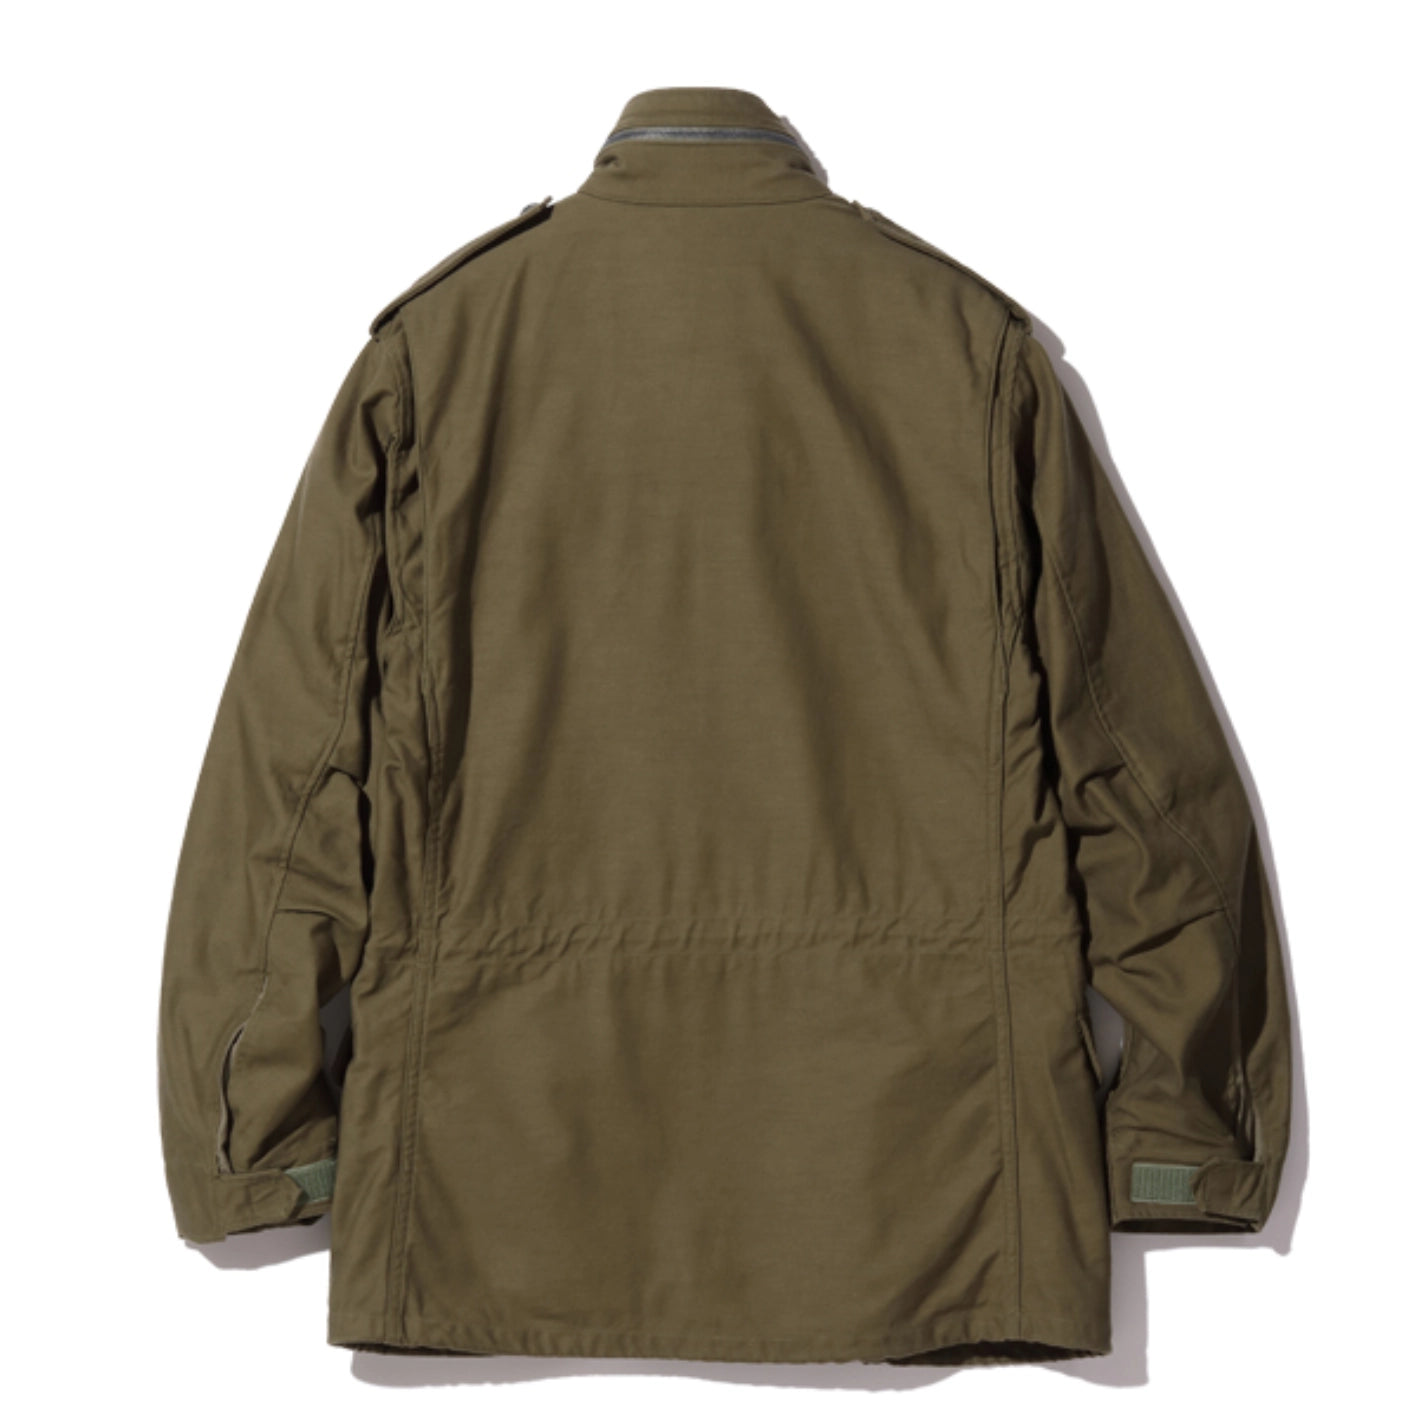 Buzz Rickson's M-65 Field Jacket – Olive Drab